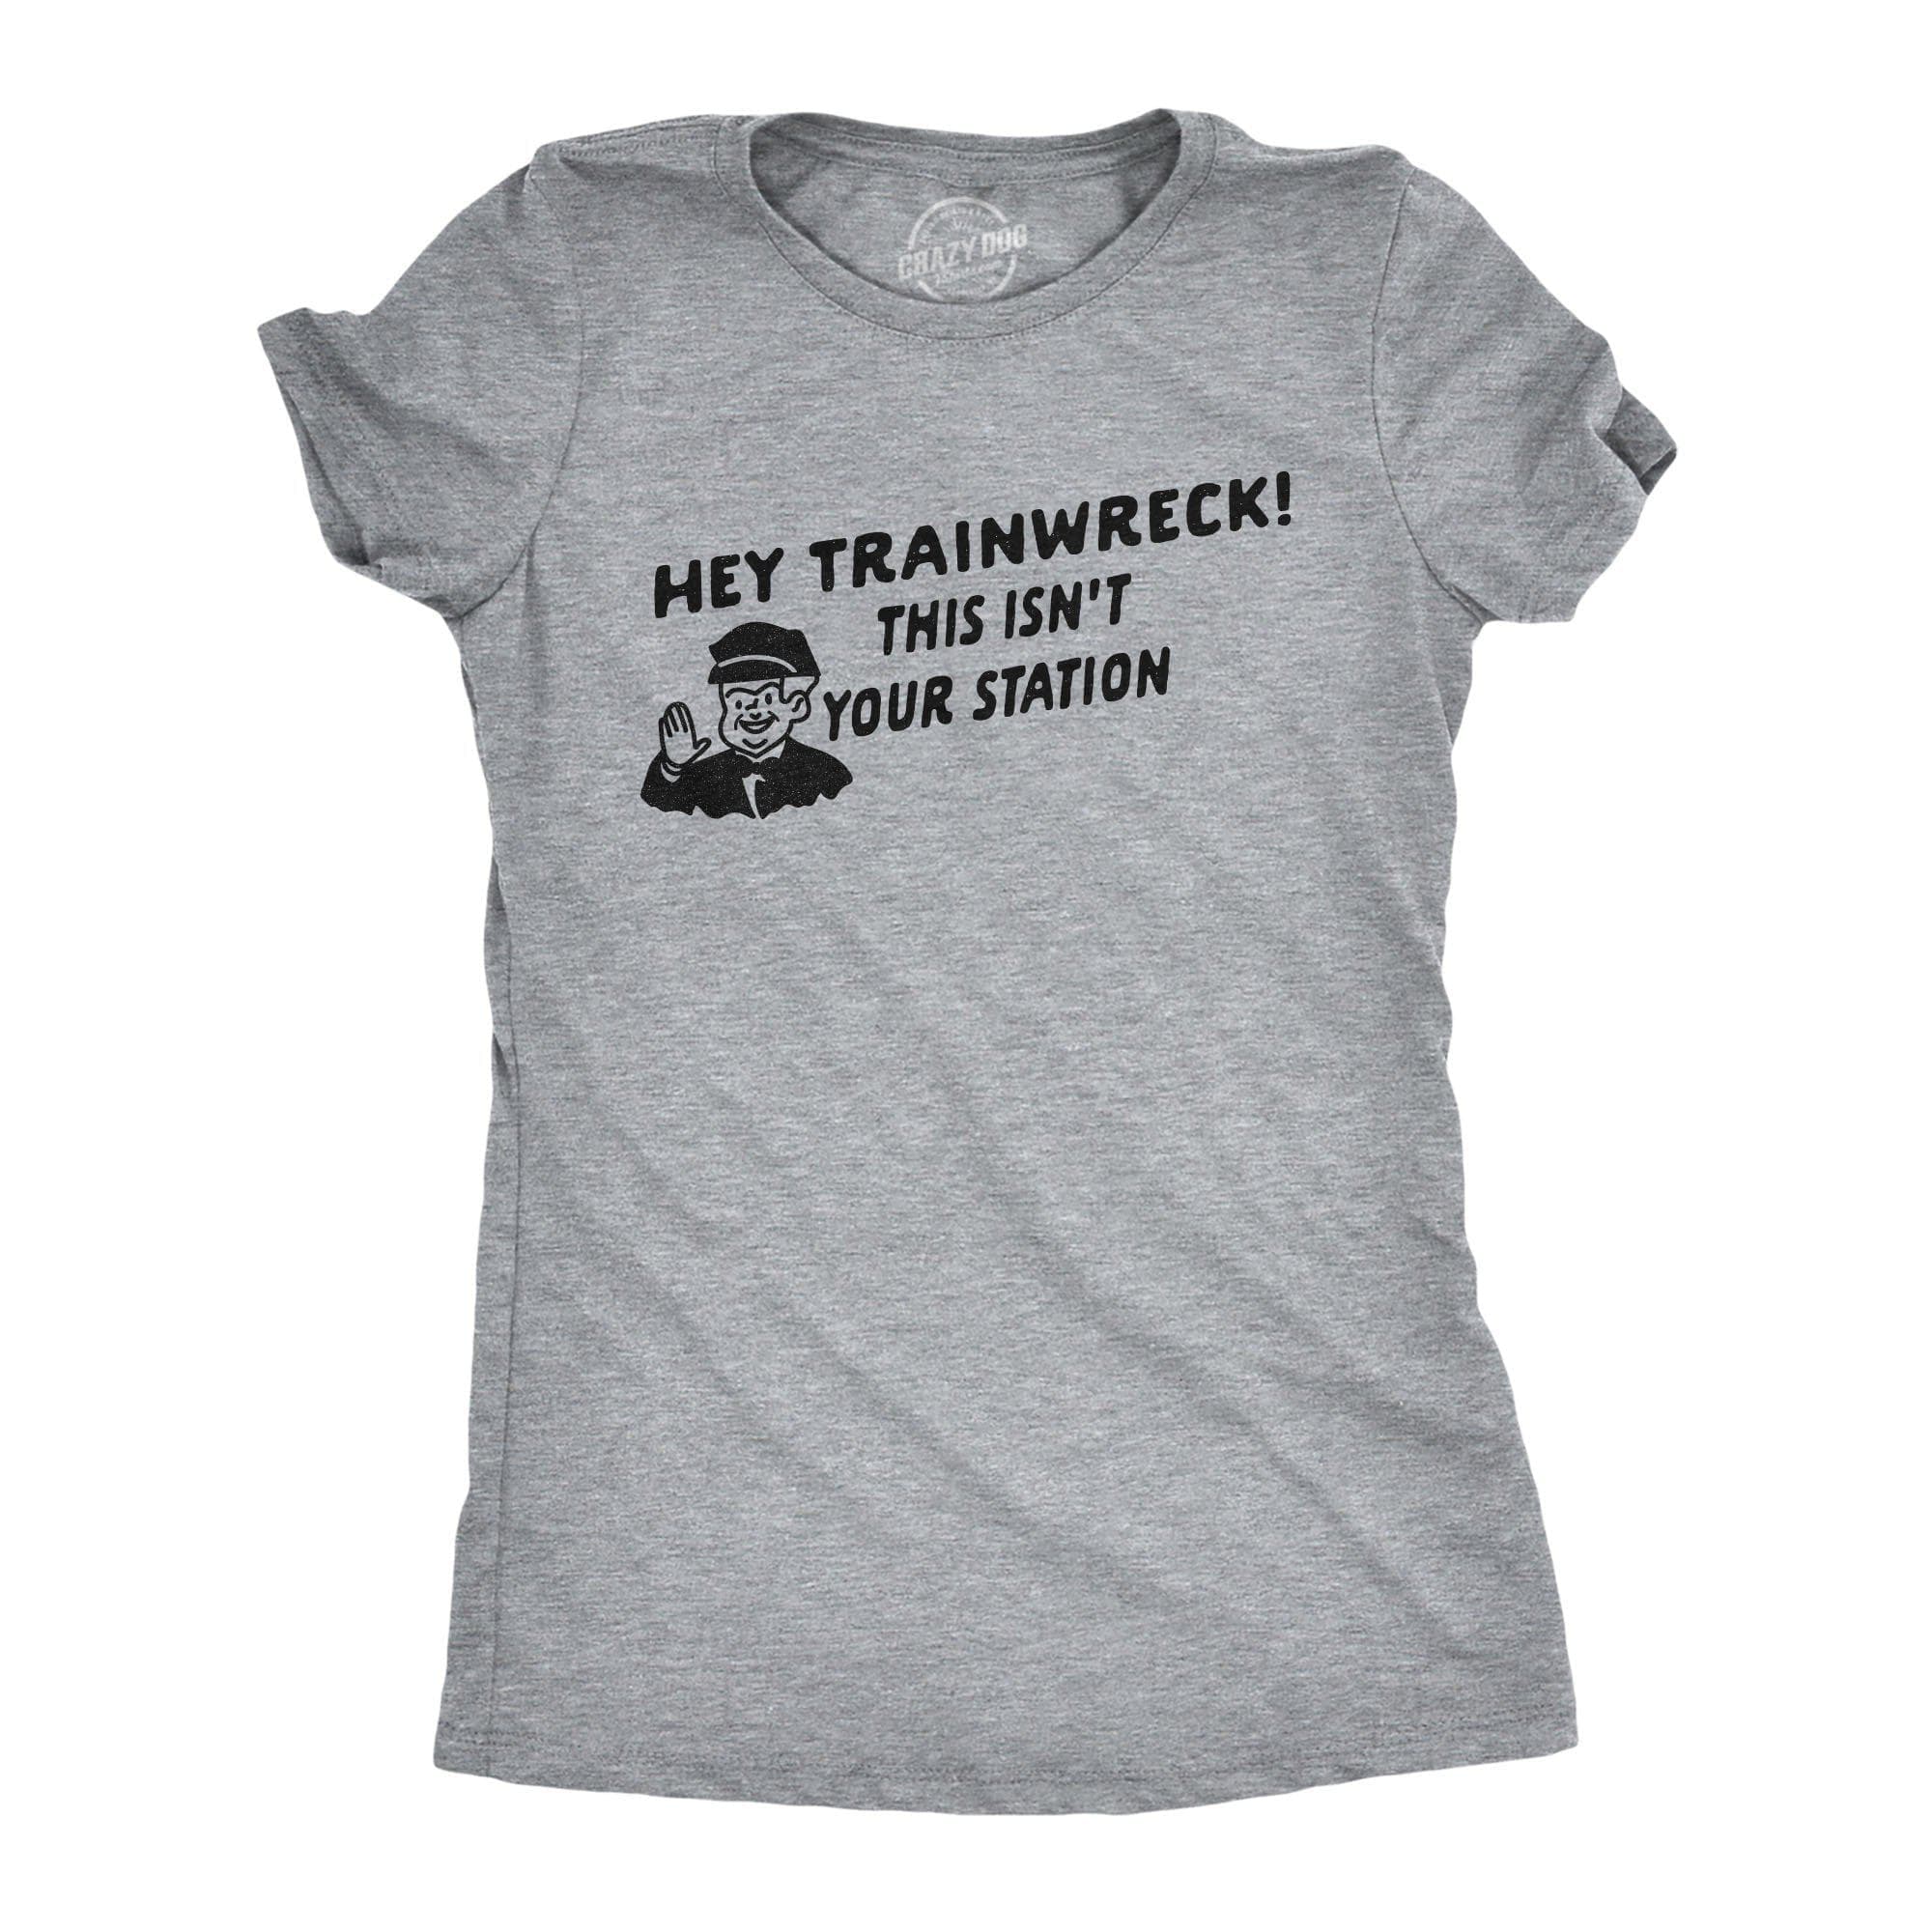 Hey Trainwreck Women's Tshirt - Crazy Dog T-Shirts